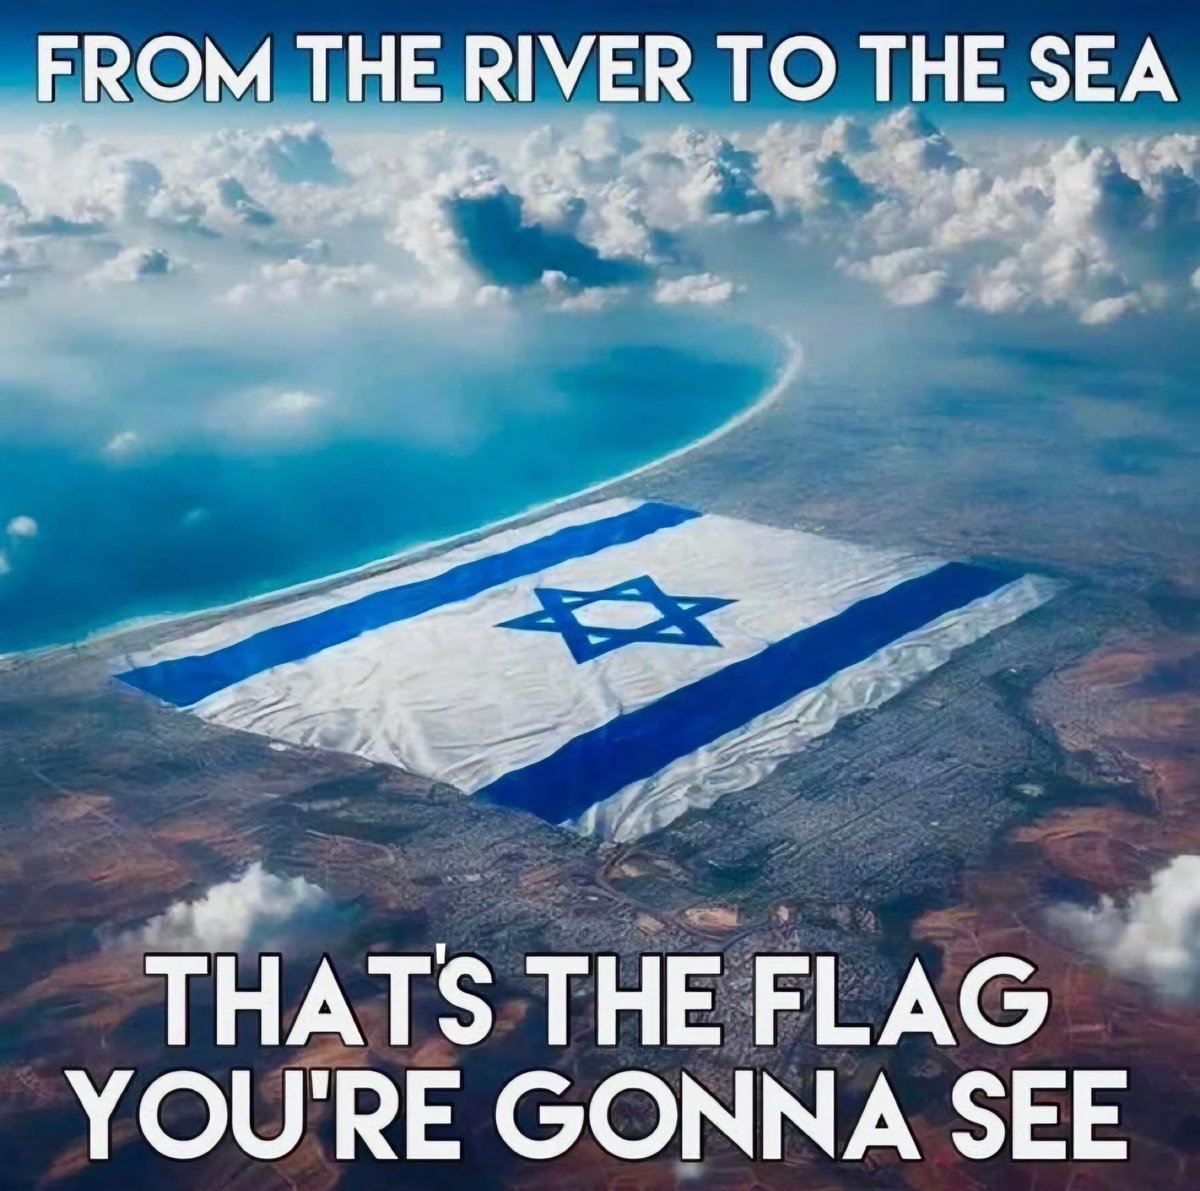 🇮🇱🇮🇱🇮🇱🇮🇱🇮🇱🇮🇱🇮🇱🇮🇱🇮🇱🇮🇱🇮🇱🇮🇱🇮🇱🇮🇱 Happy 76th Birthday to Israel! 🇮🇱🇮🇱🇮🇱🇮🇱🇮🇱🇮🇱🇮🇱🇮🇱🇮🇱🇮🇱🇮🇱🇮🇱🇮🇱🇮🇱